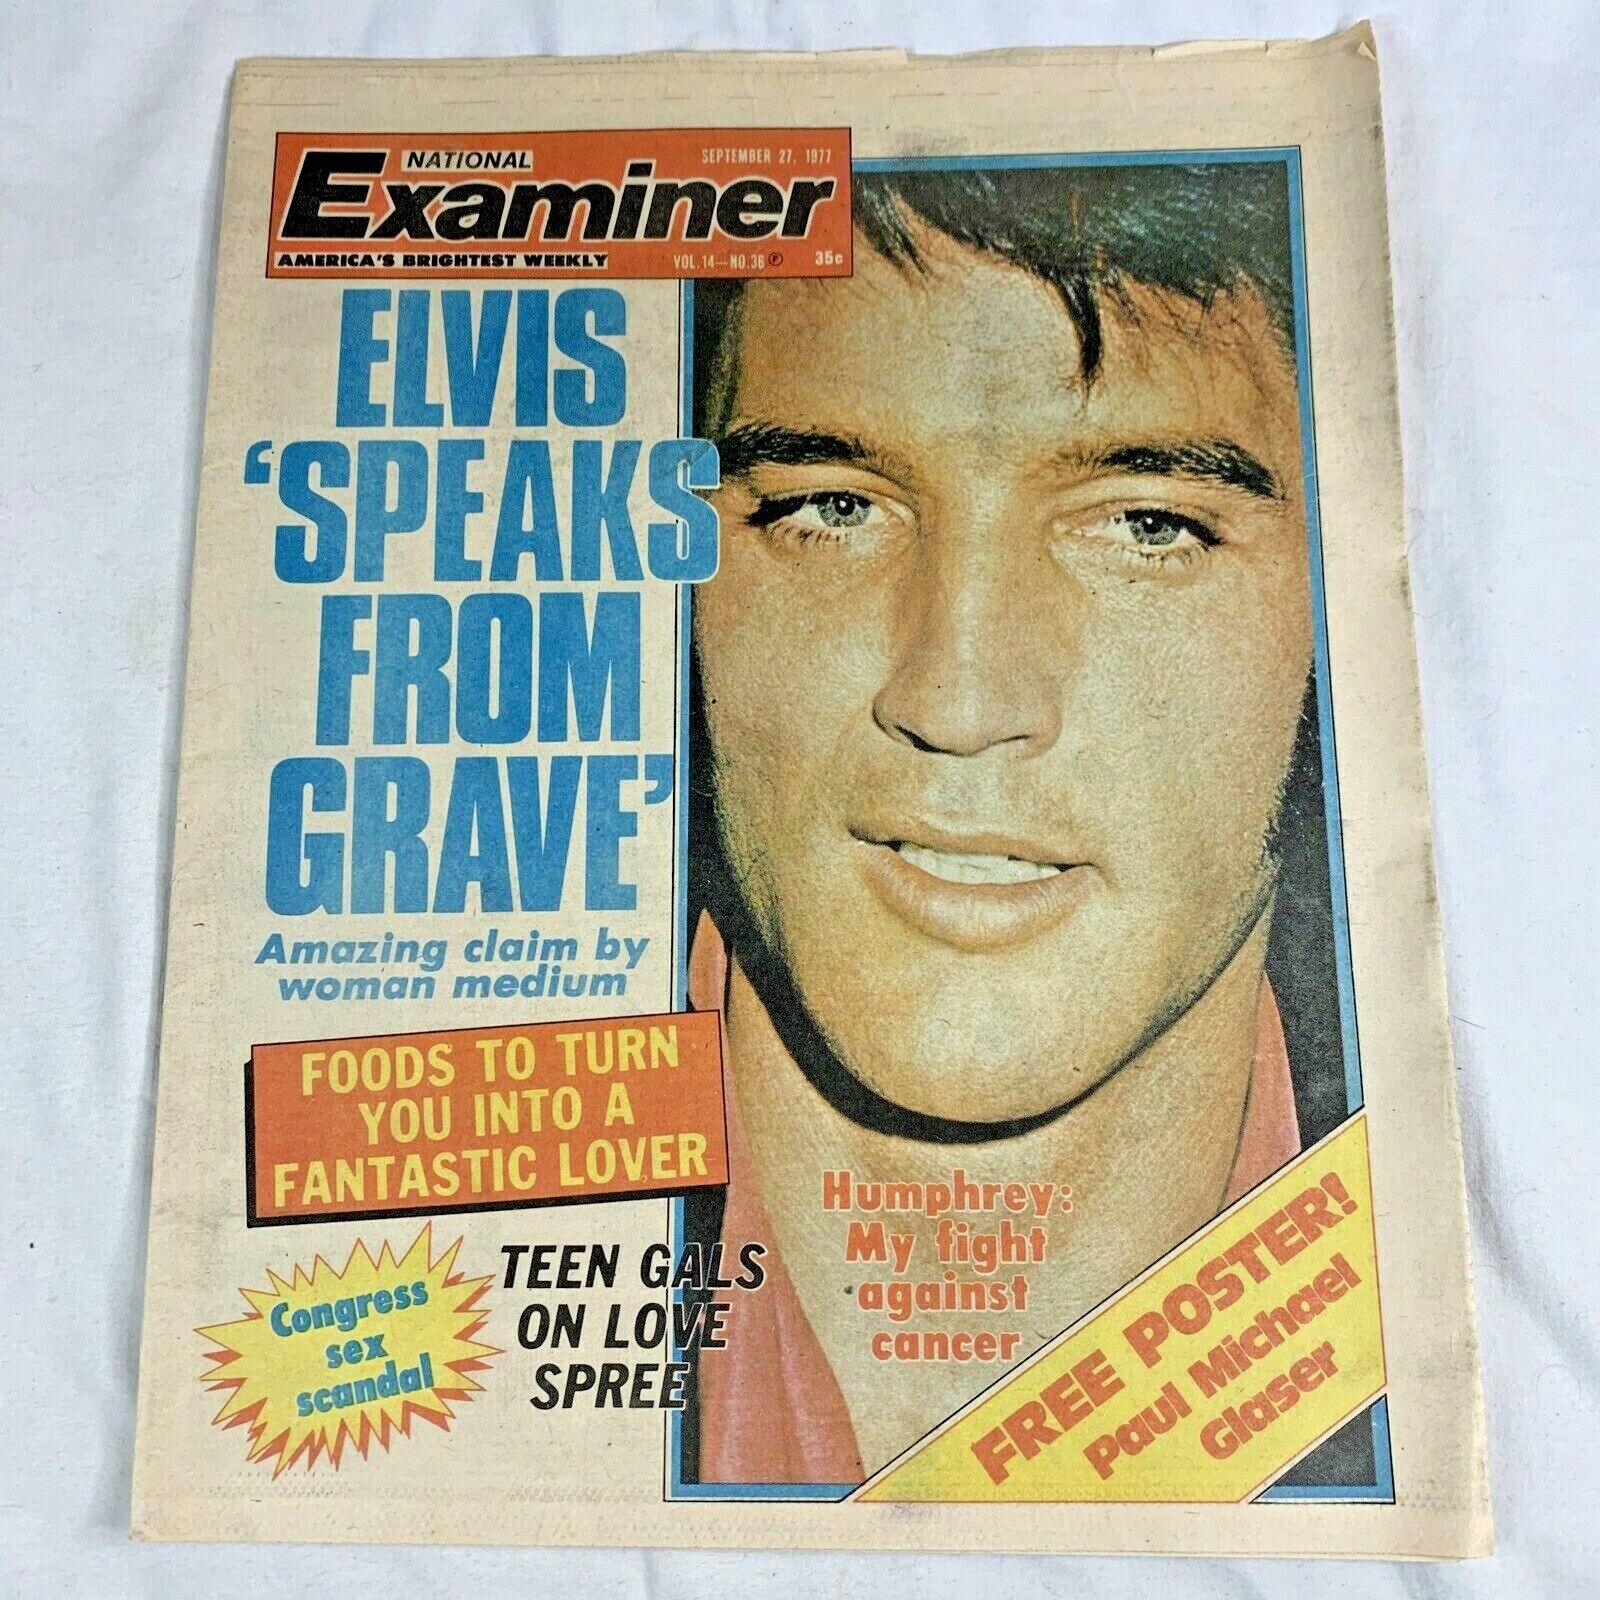 National Examiner Elvis Presley Speaks From Grave September 27, 1977